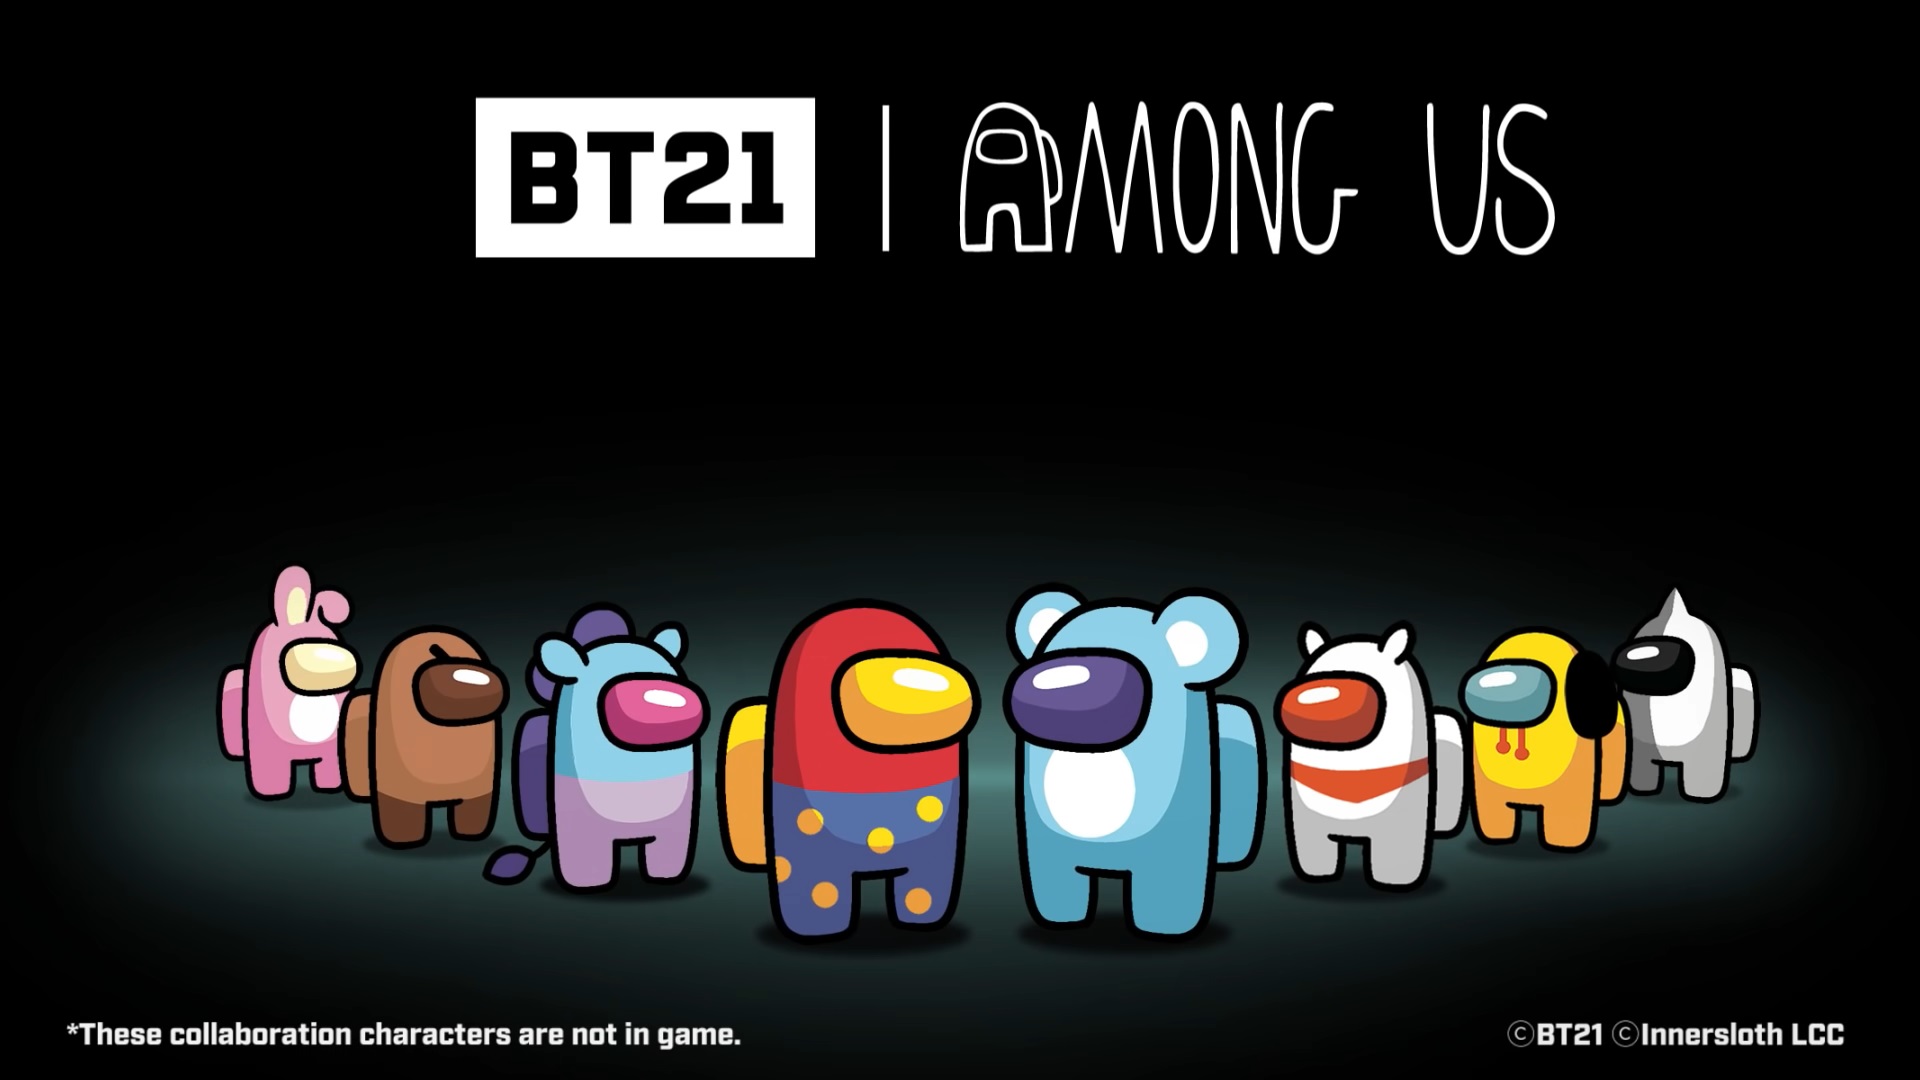 Among Us とbtsのキャラクターブランド Bt21 がコラボ 11月25日にコンテンツ公開へ